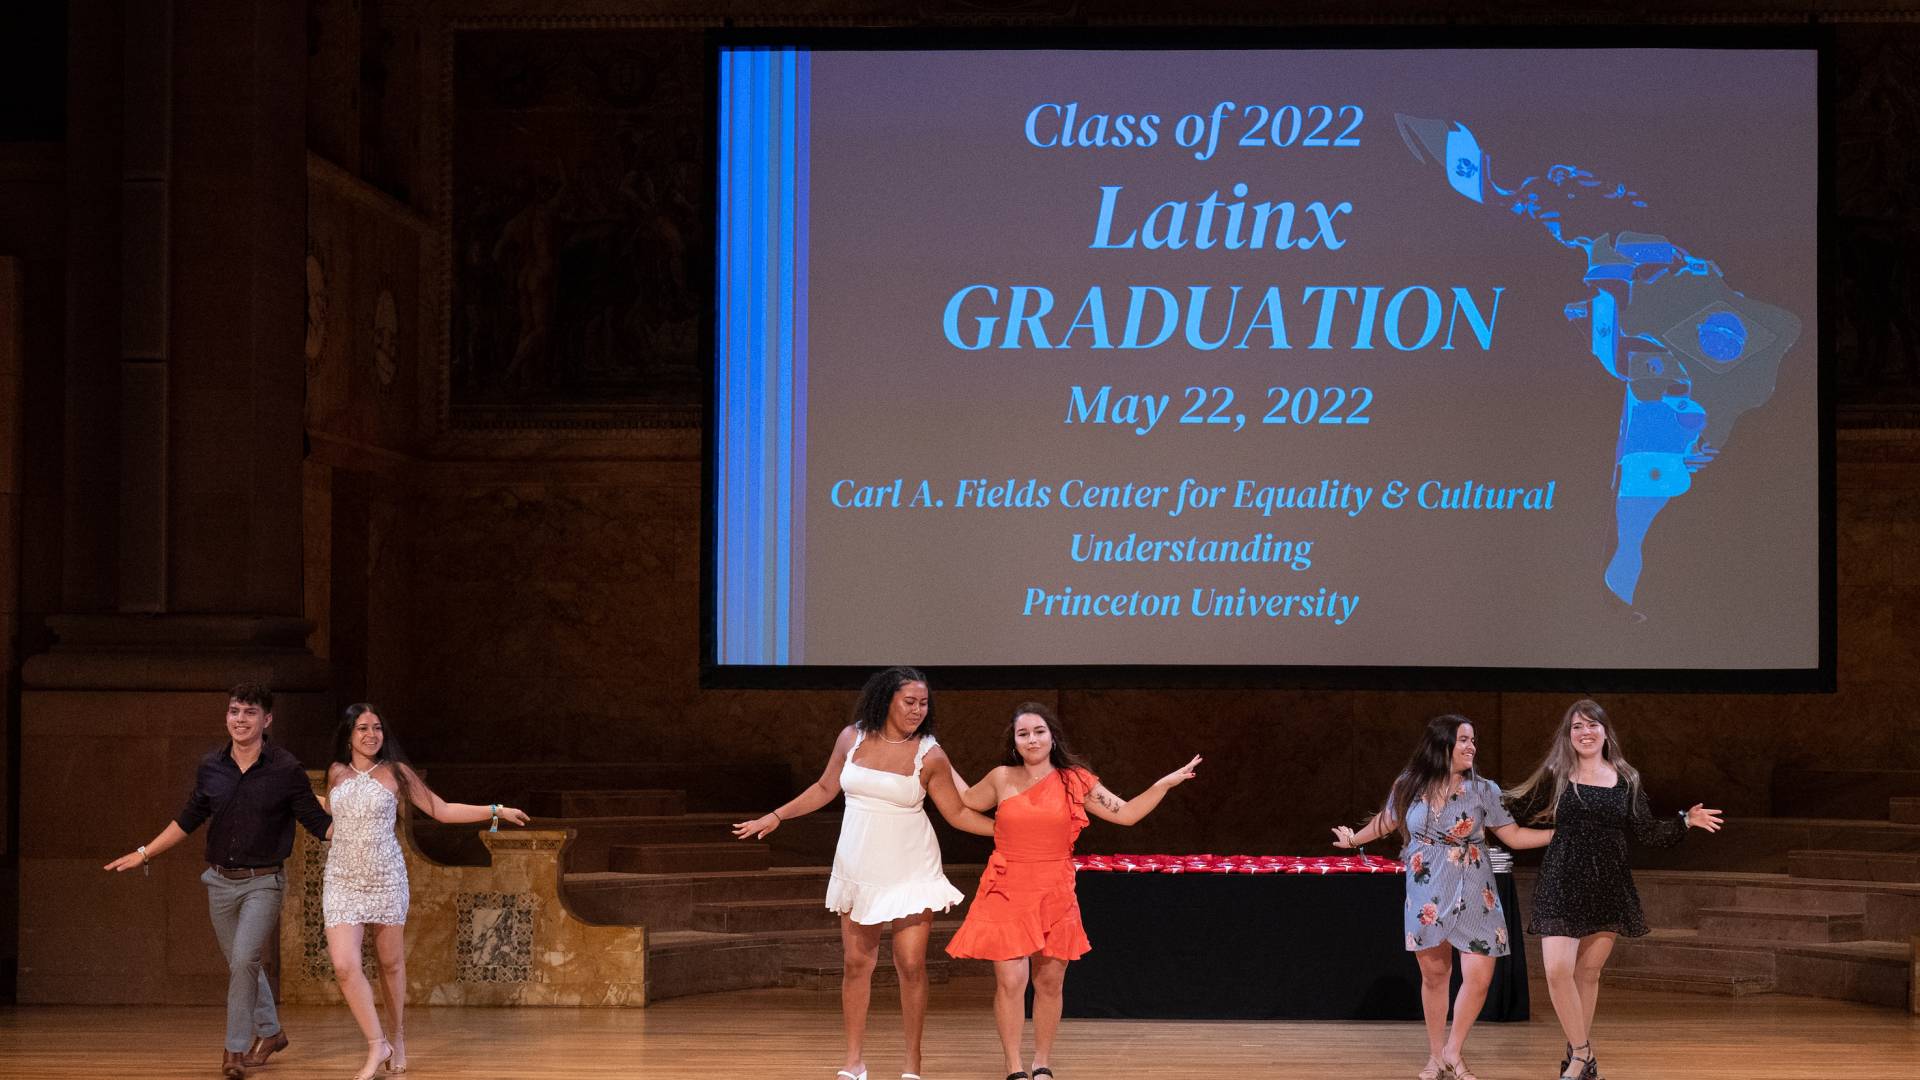 Students dance on stage at Latinx Graduation ceremony.